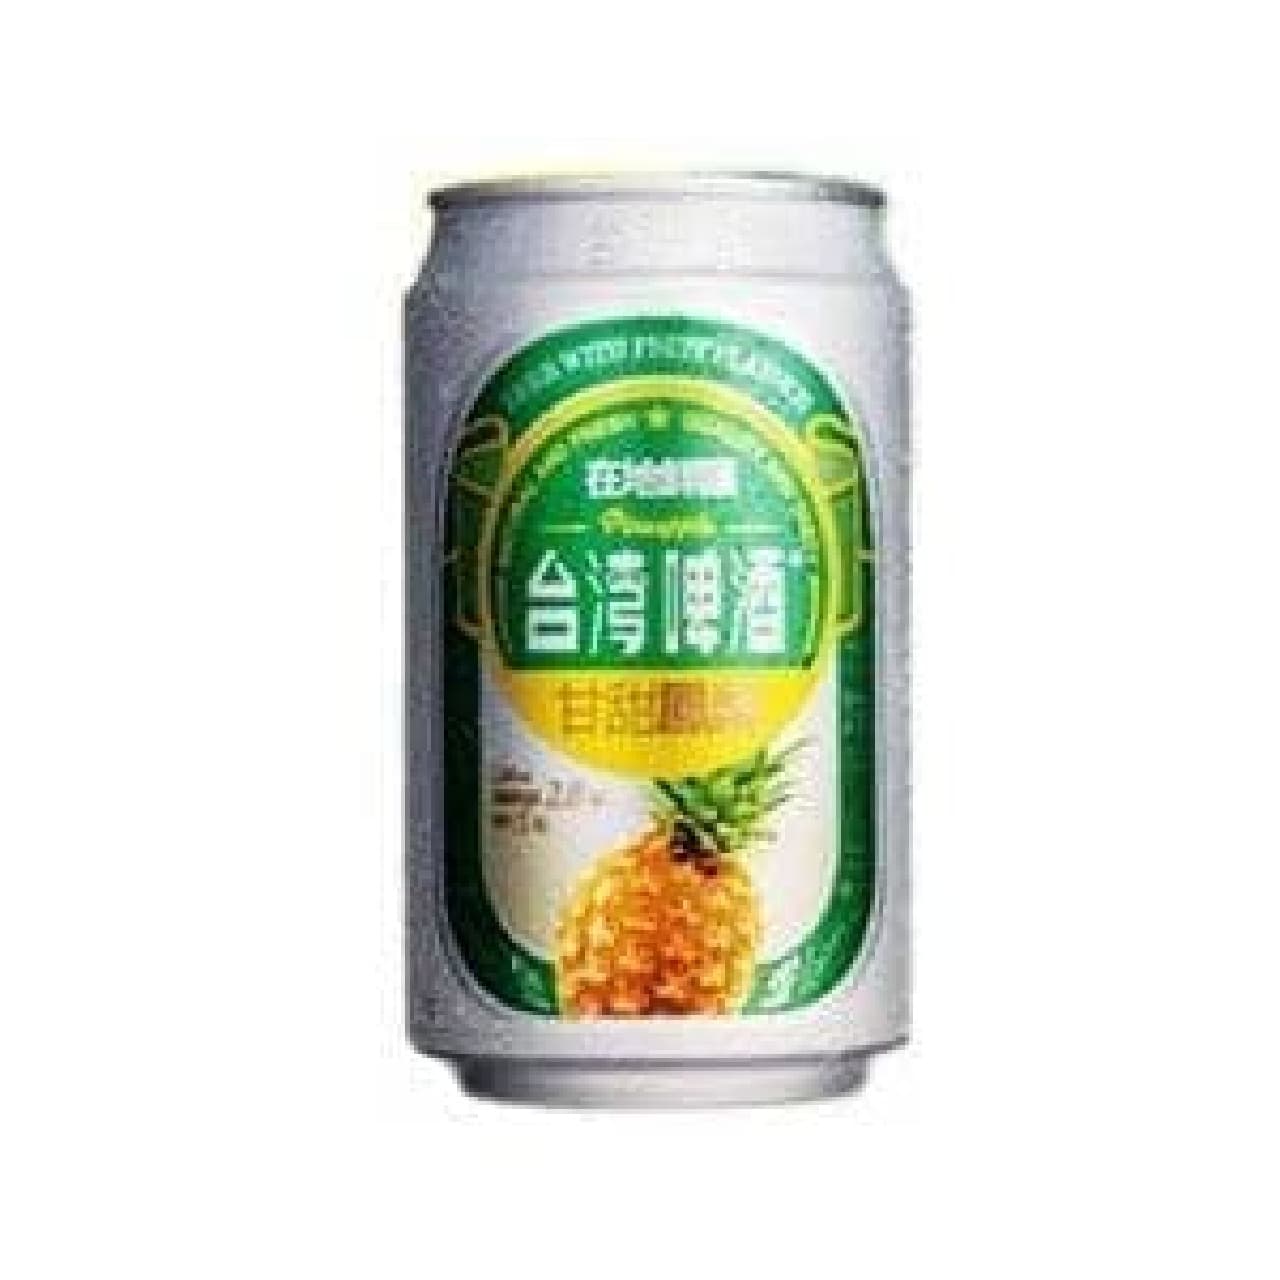 The blockbuster "pineapple beer" in Taiwan has finally landed in Japan!